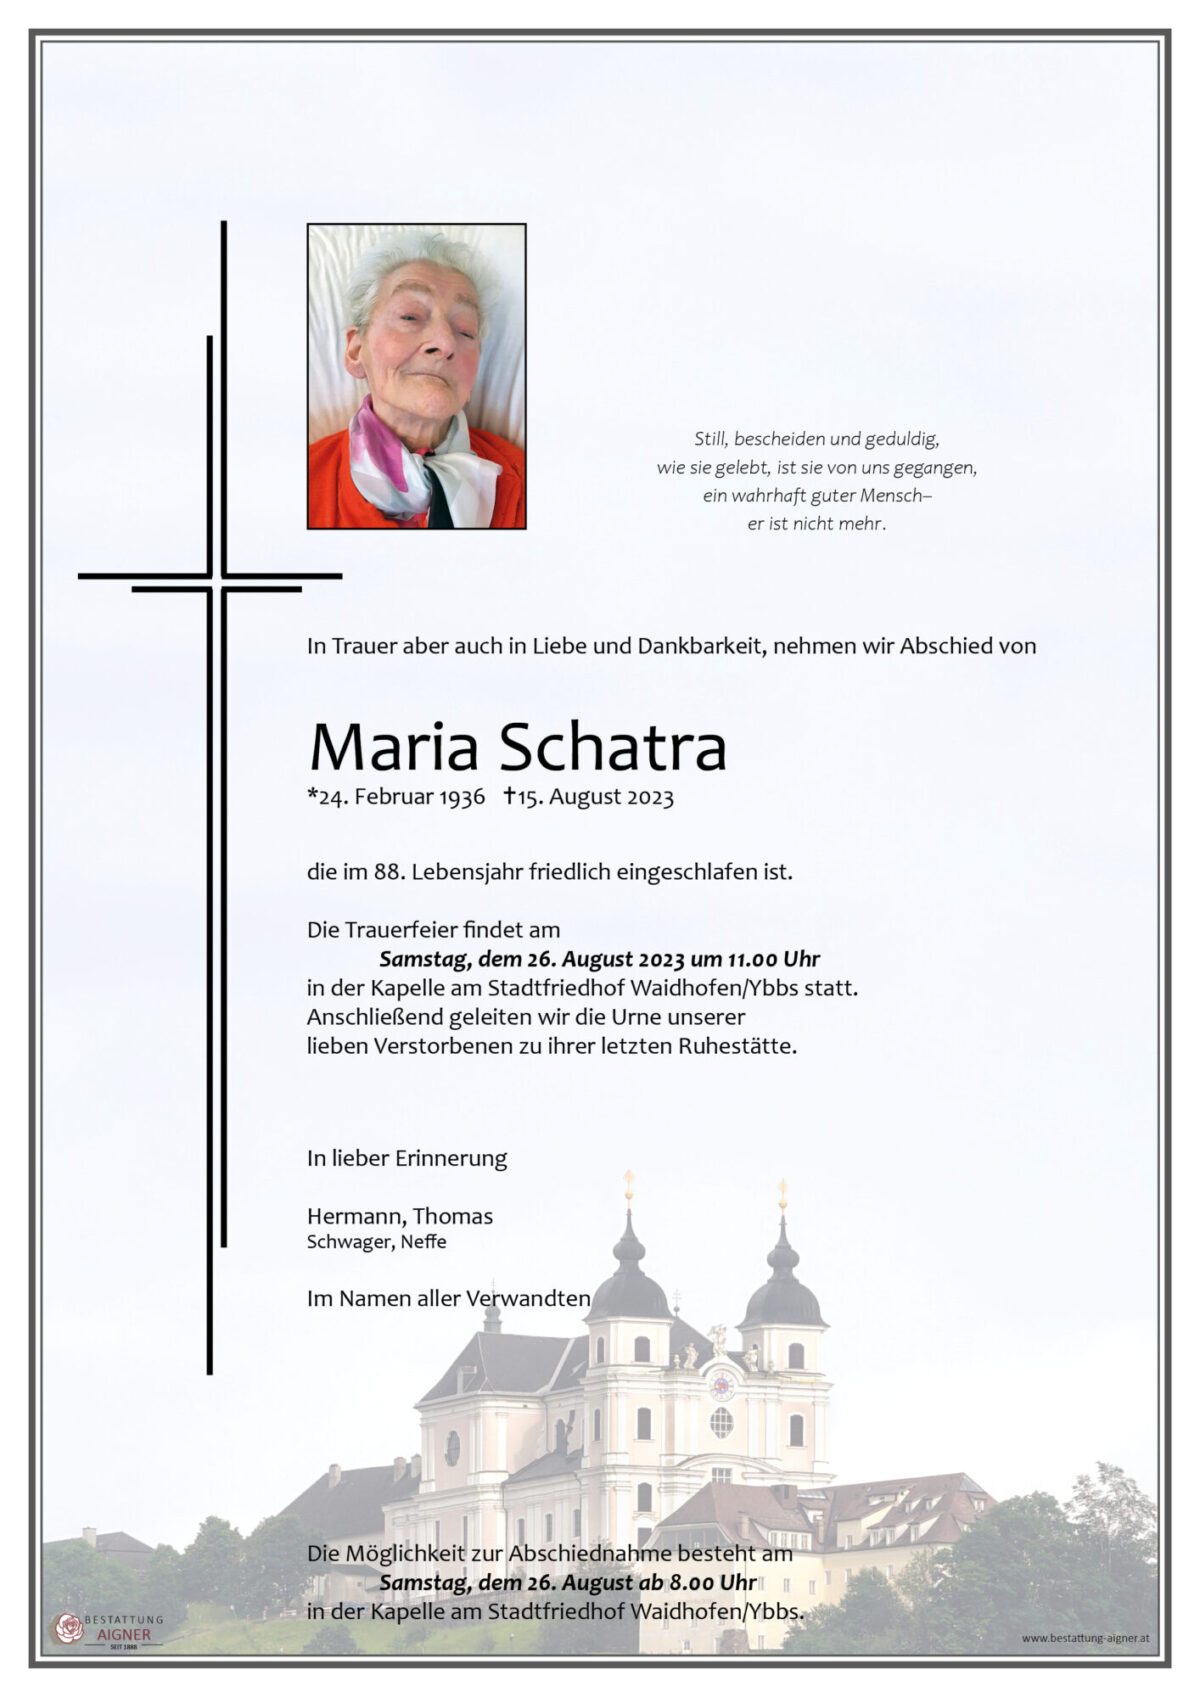 Maria Schatra